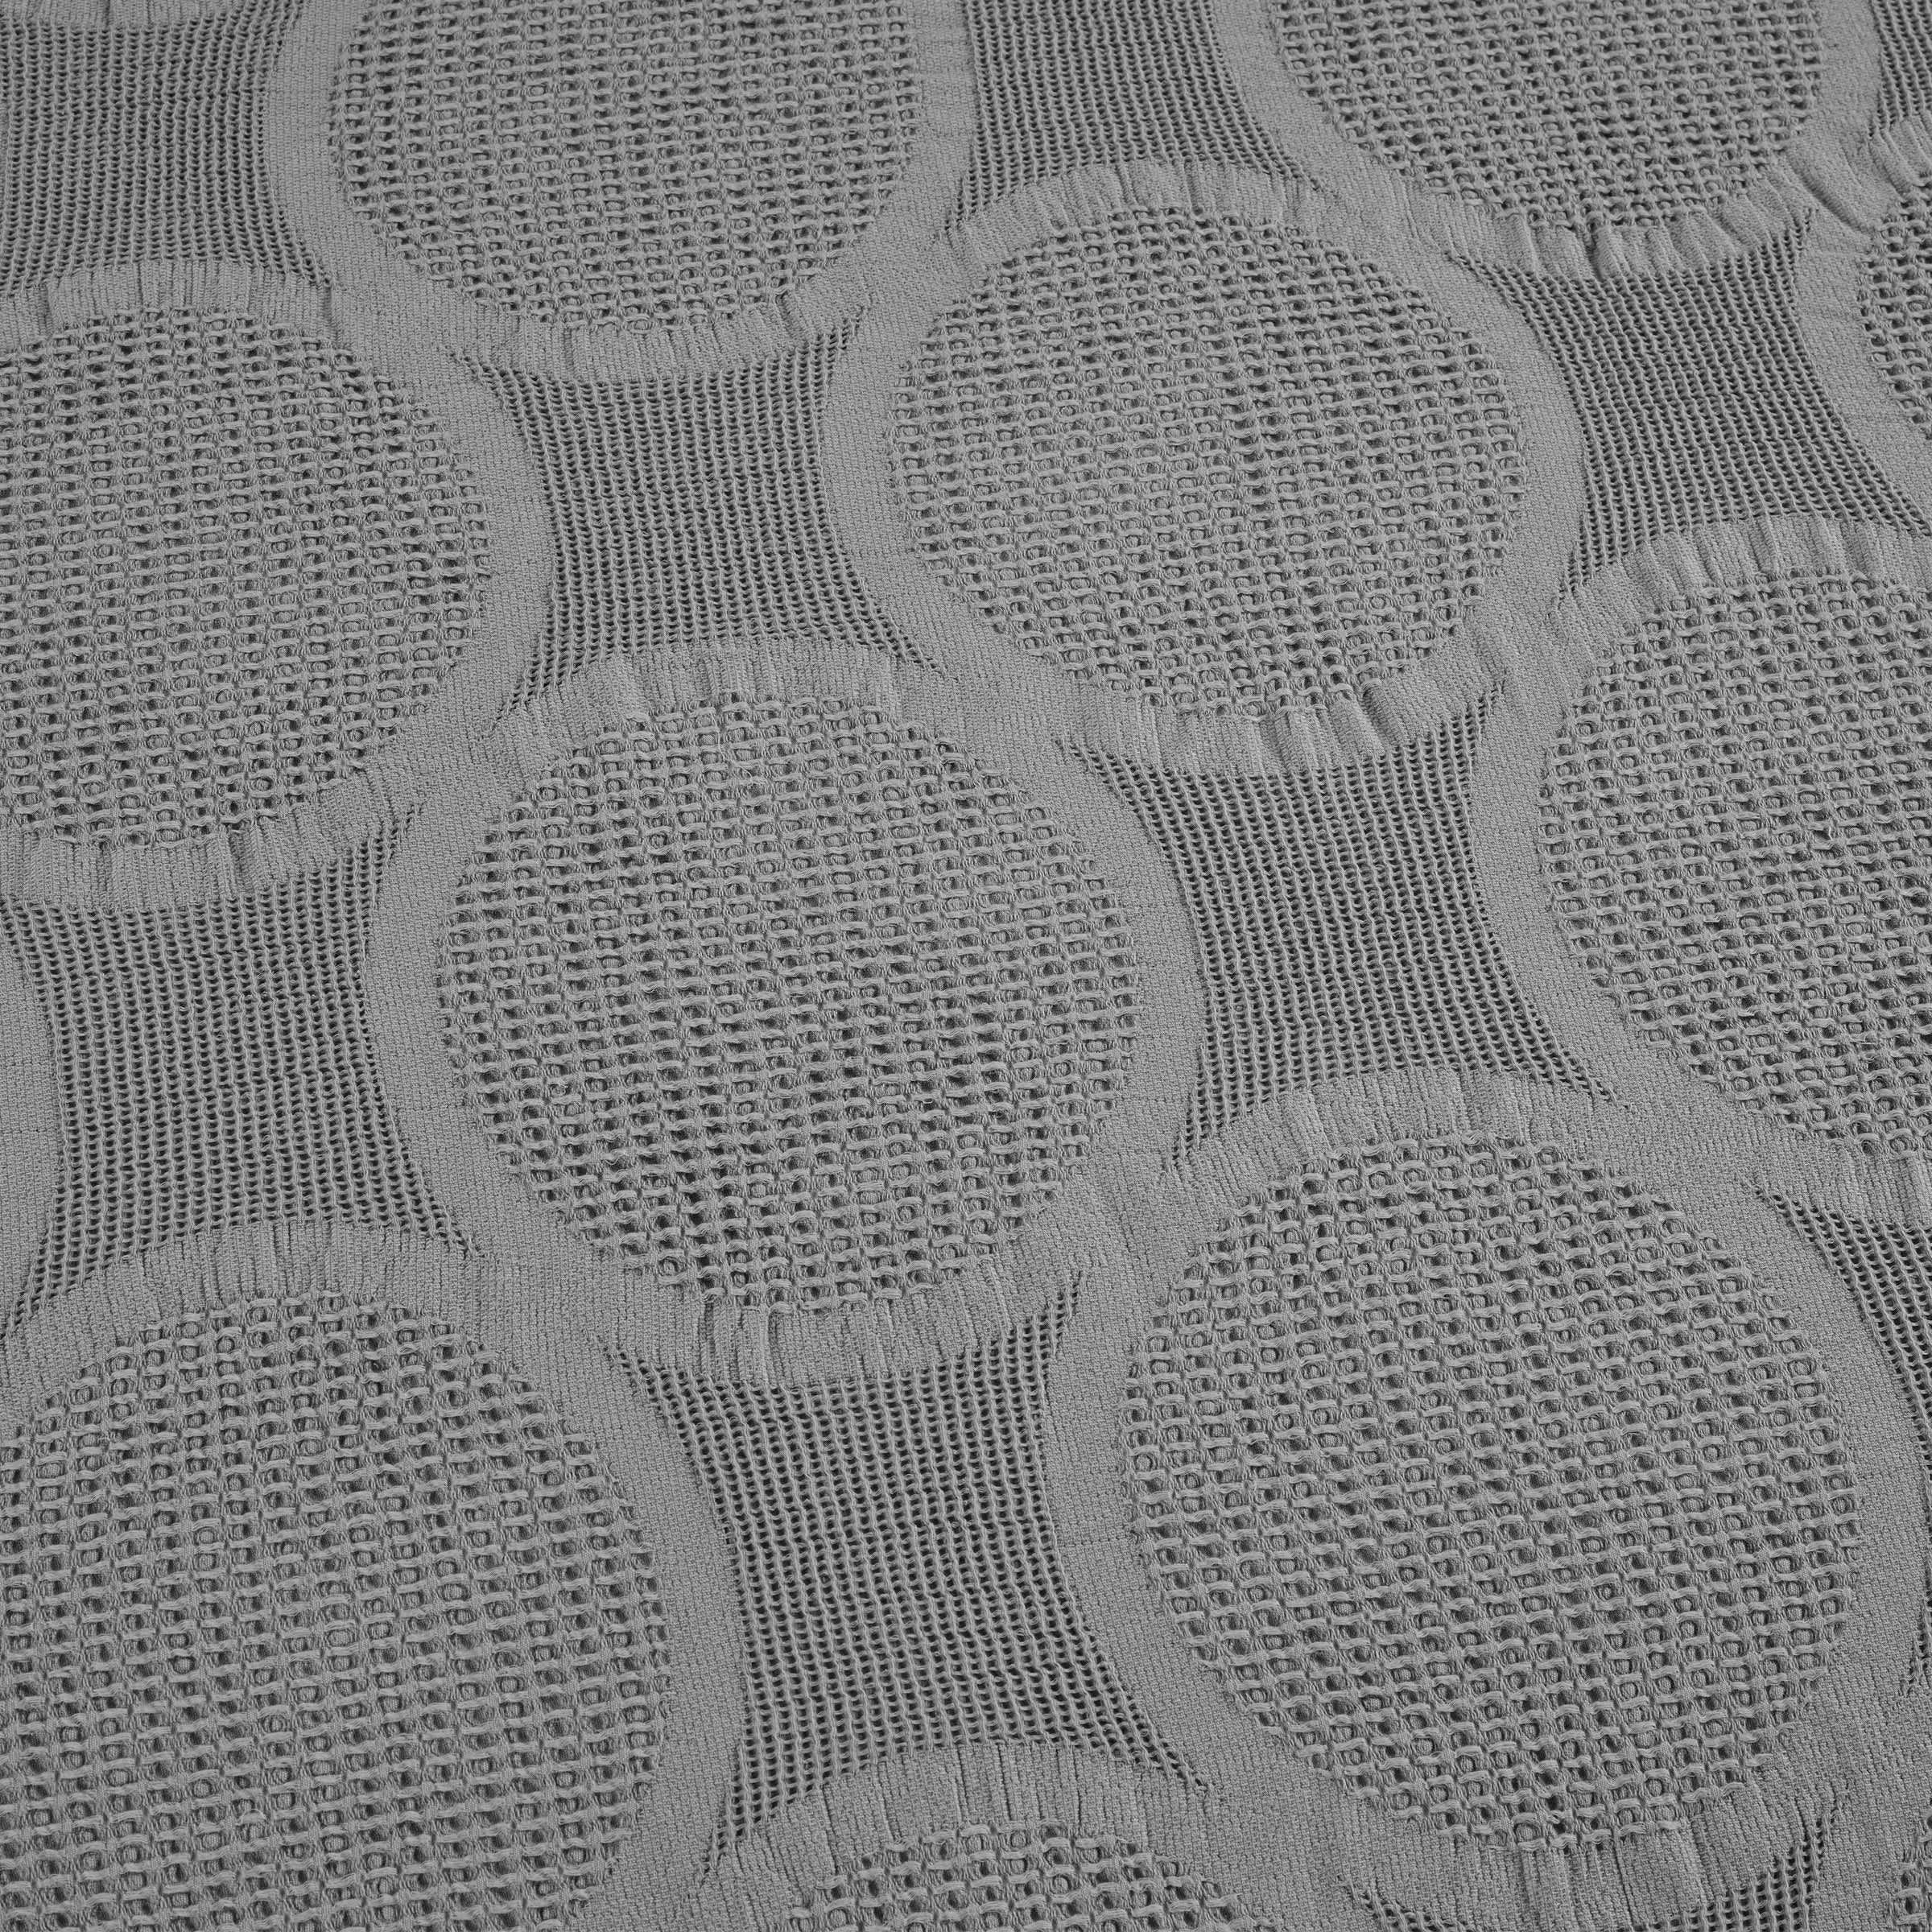 Leon Grey 3-Piece Comforter Set Comforter Sets By Donna Sharp